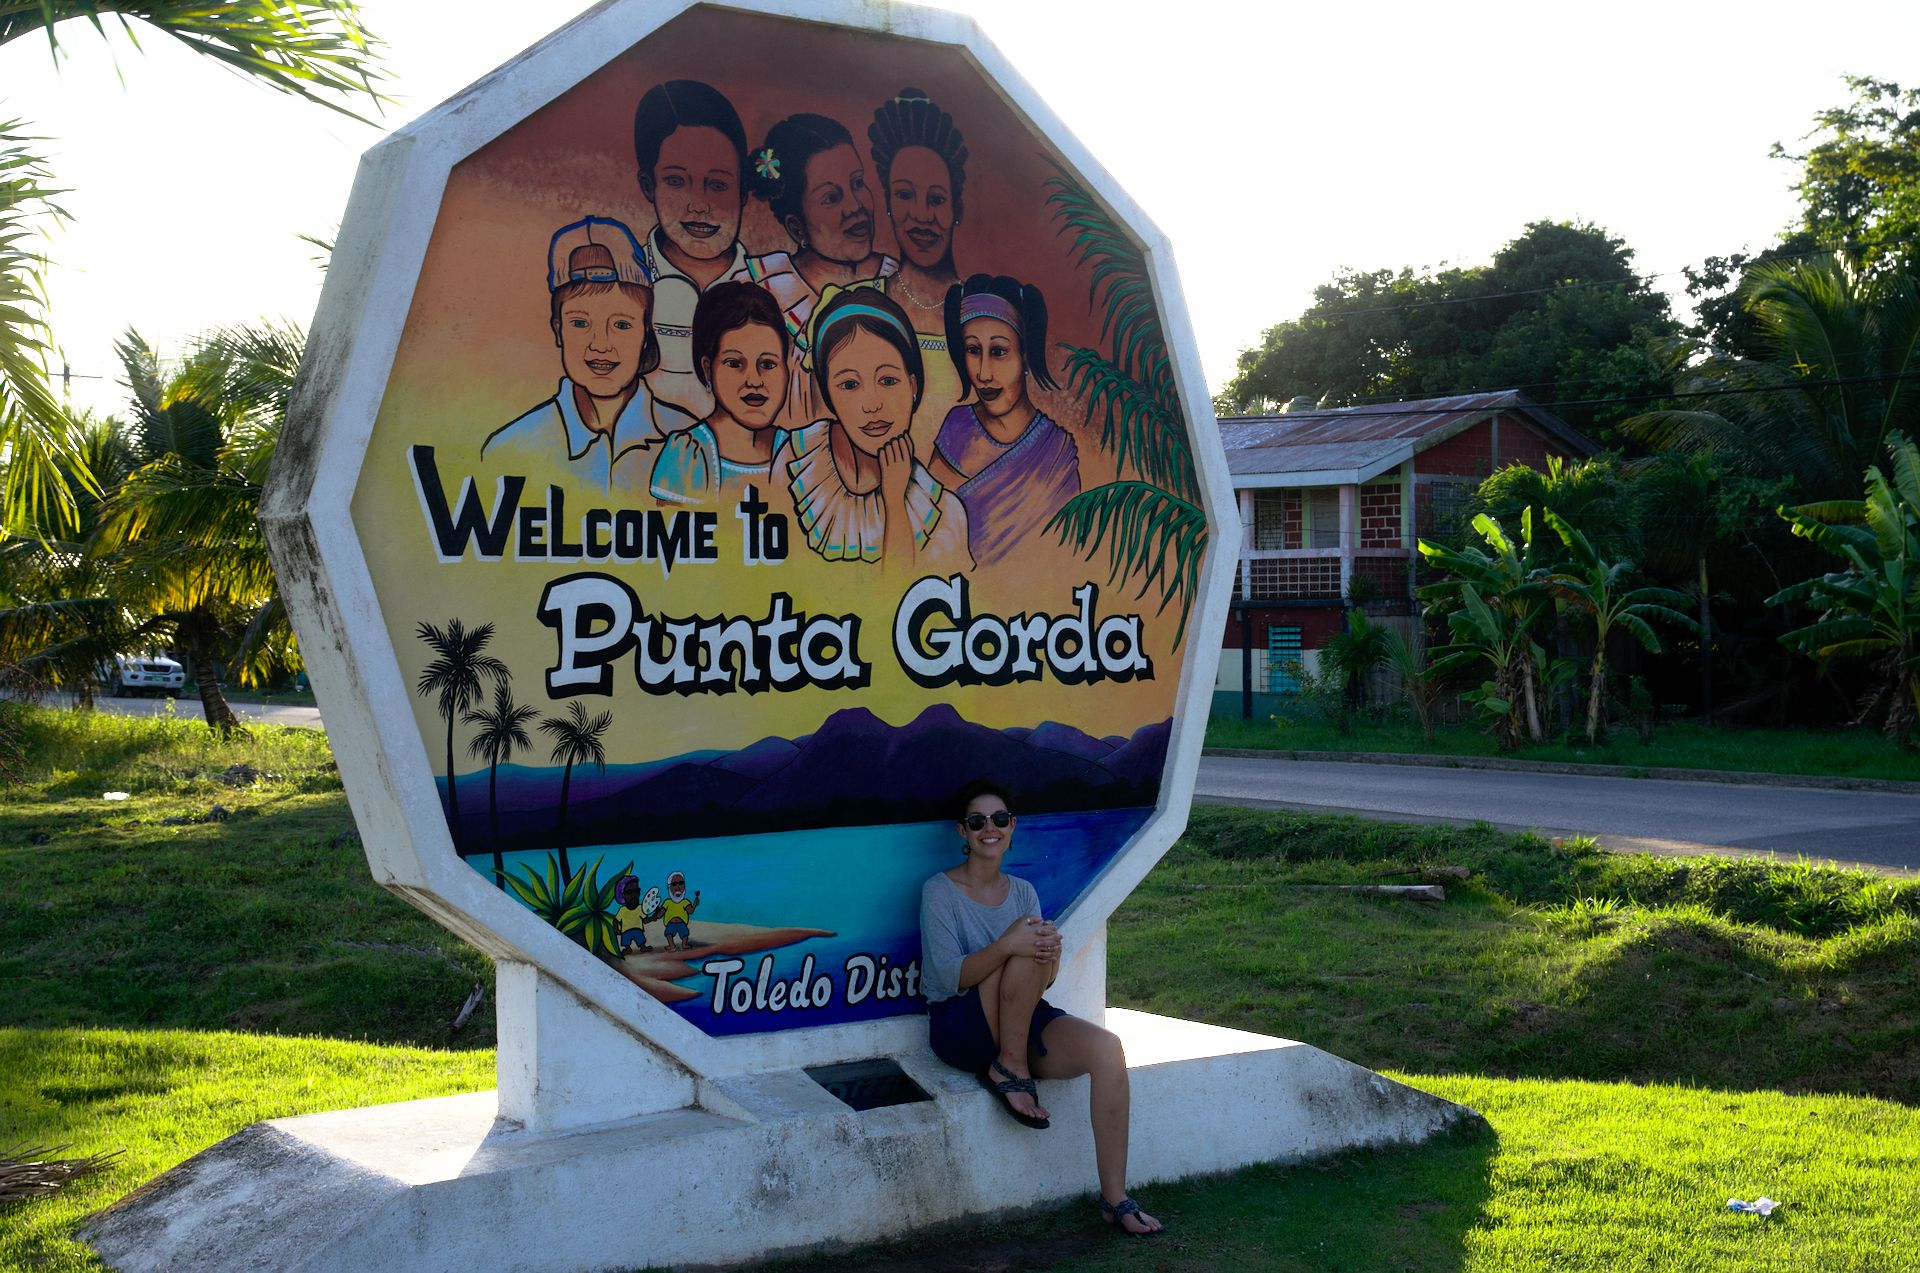 You better Belize it - Punta Gorda